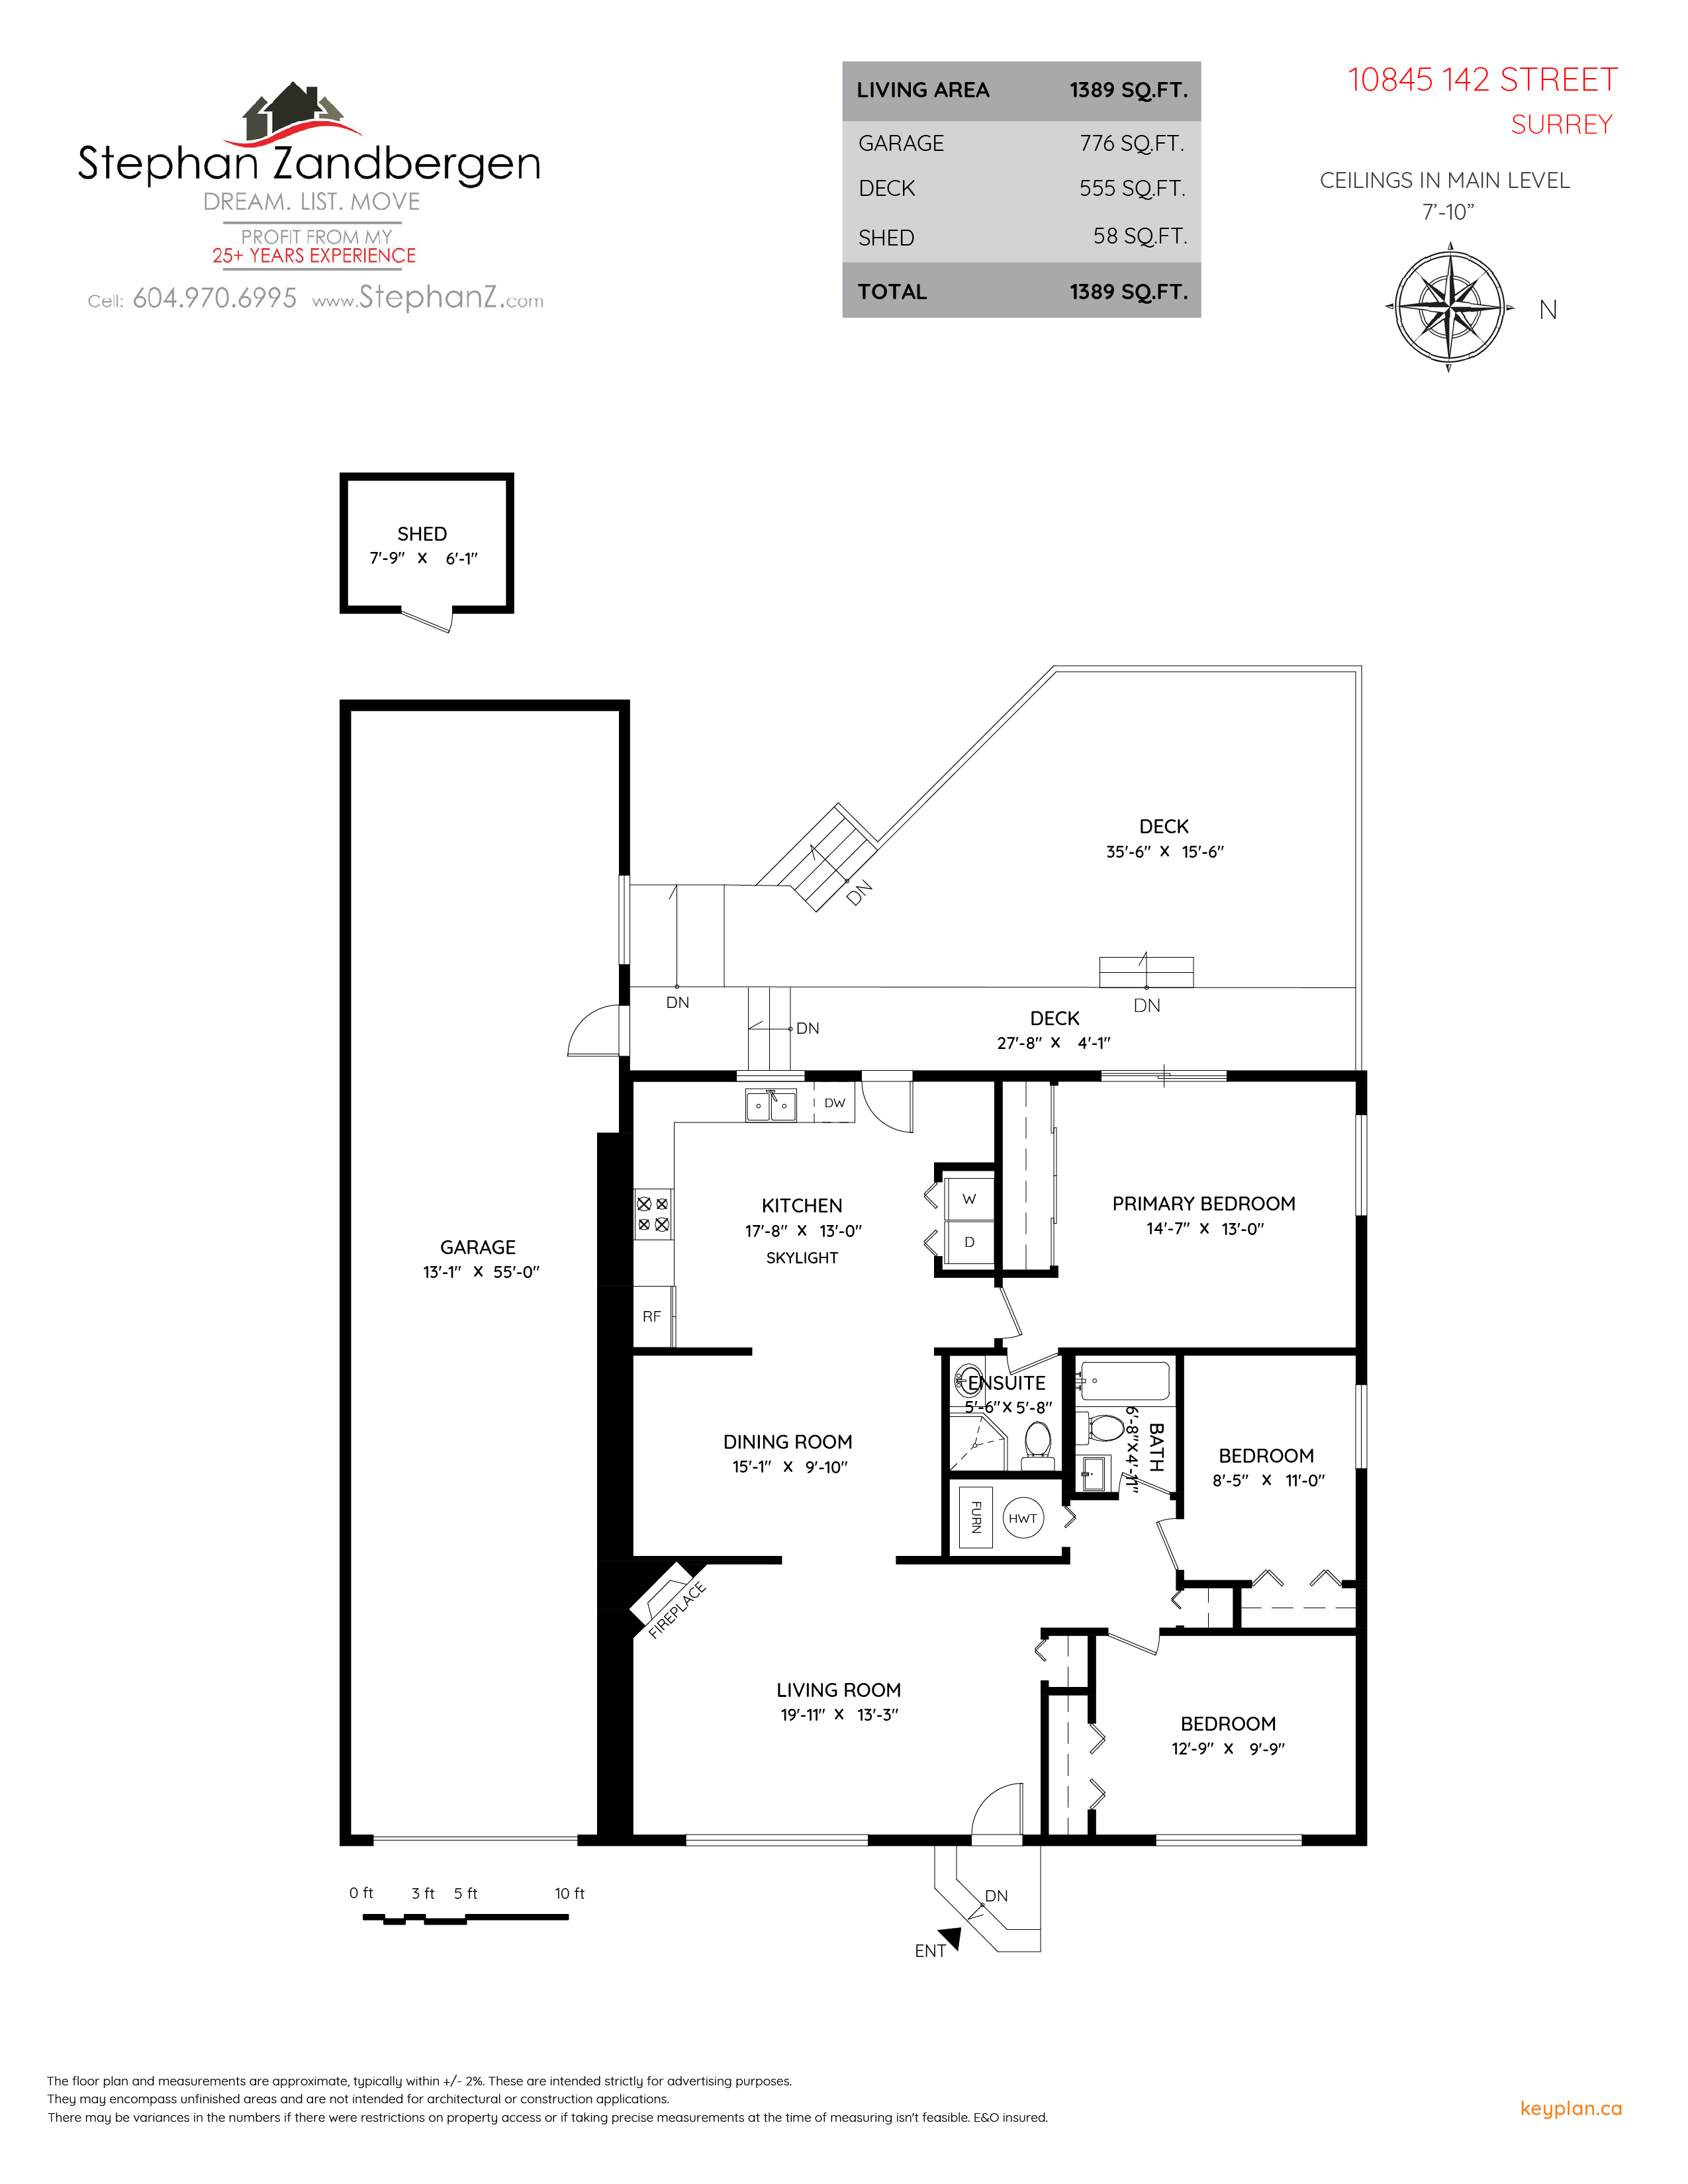 Stephan Zandbergen - 10845 142 Street, Surrey, BC, Canada | Floor Plan 1